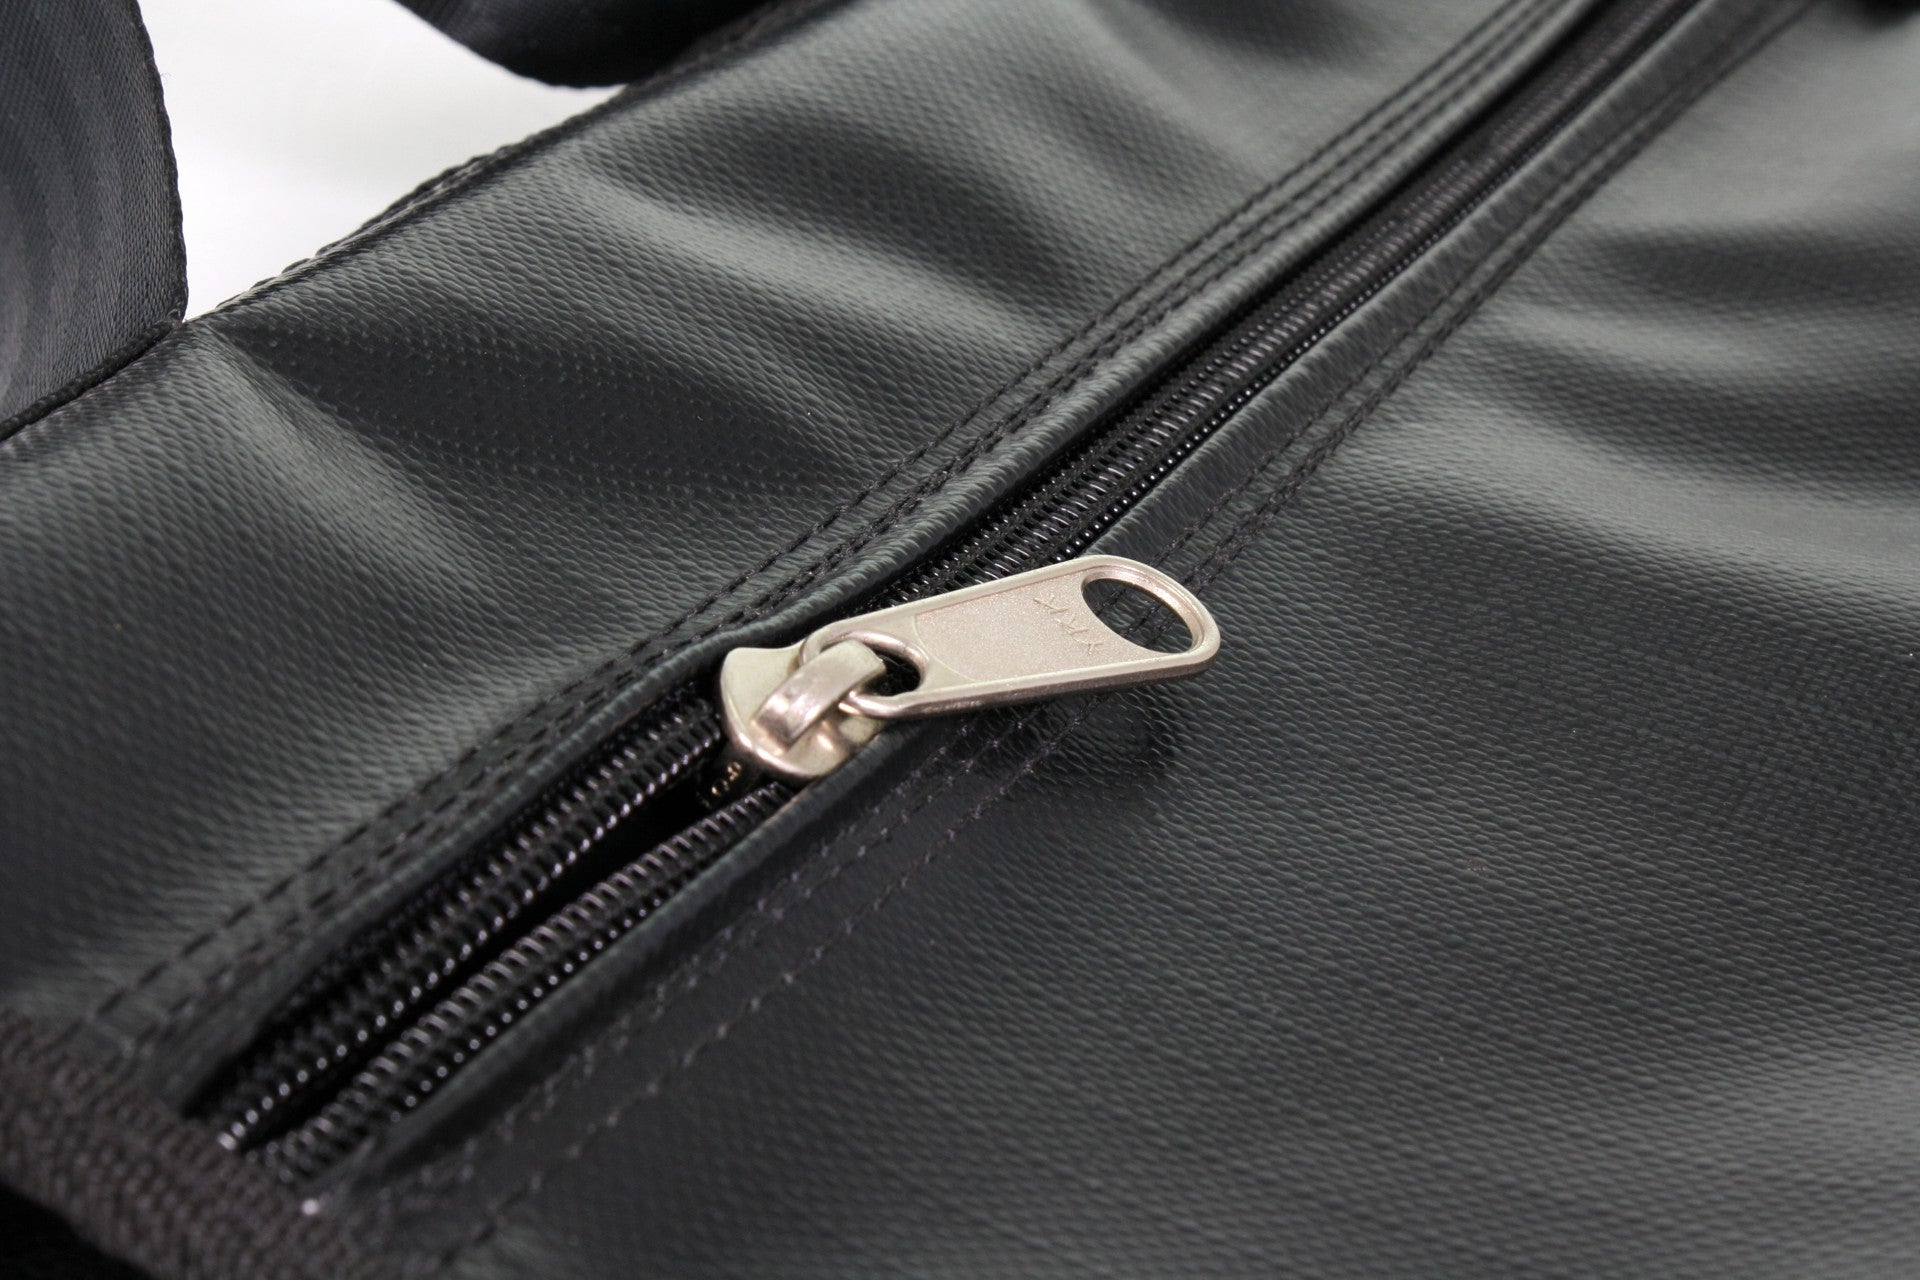 Close up of the YKK zip on the black refillable sandbag